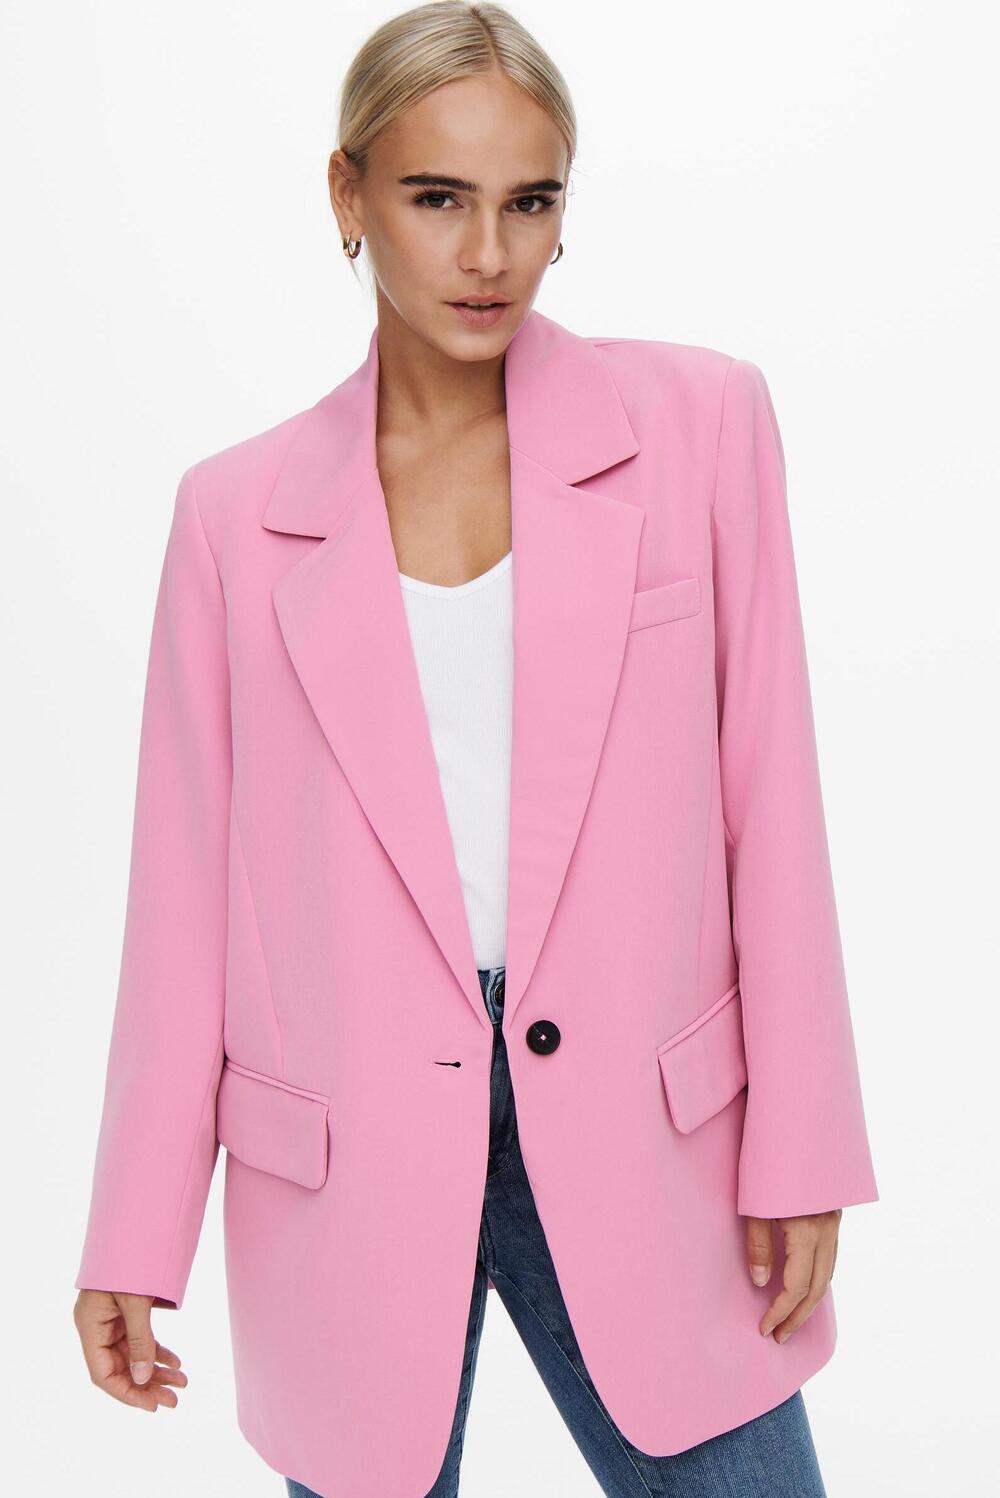 wimper Aardbei mode onllana-berry l/s oversize blazer t 15245698 only blazer fuchsia pink